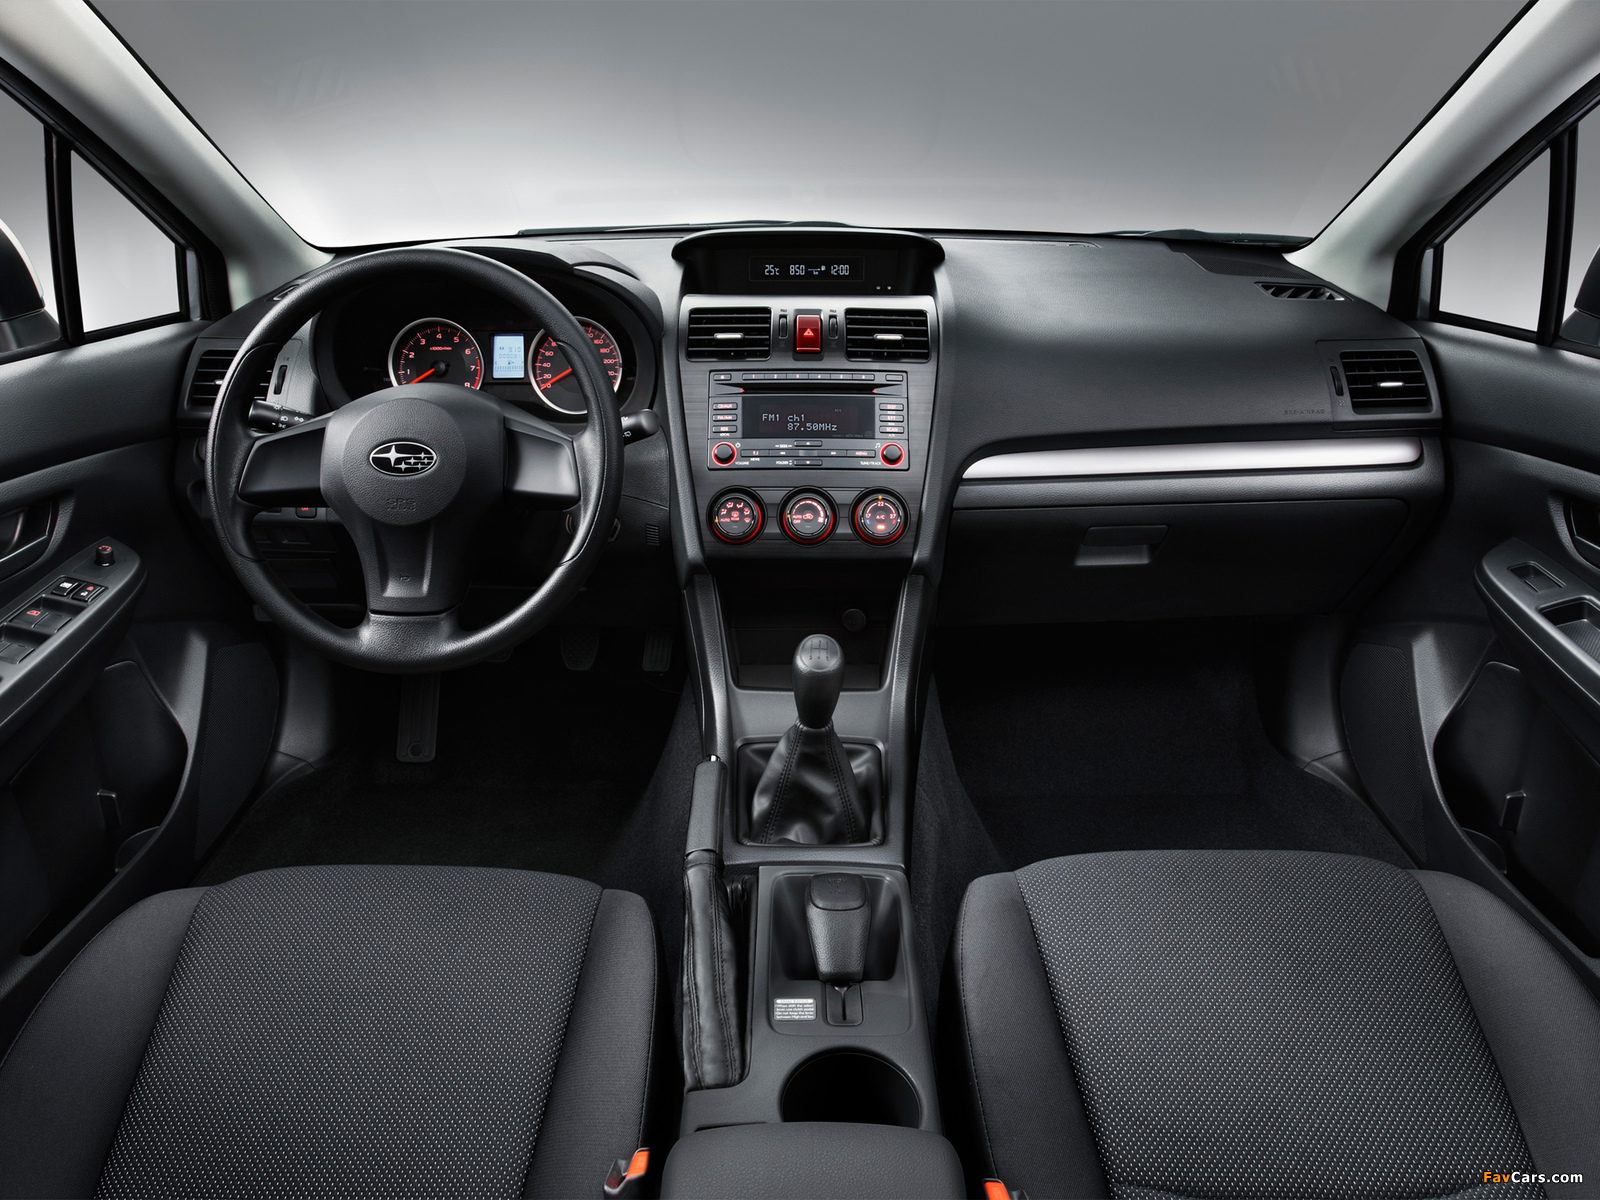 Subaru Impreza Hatchback (GP) 2011 pictures (1600 x 1200)